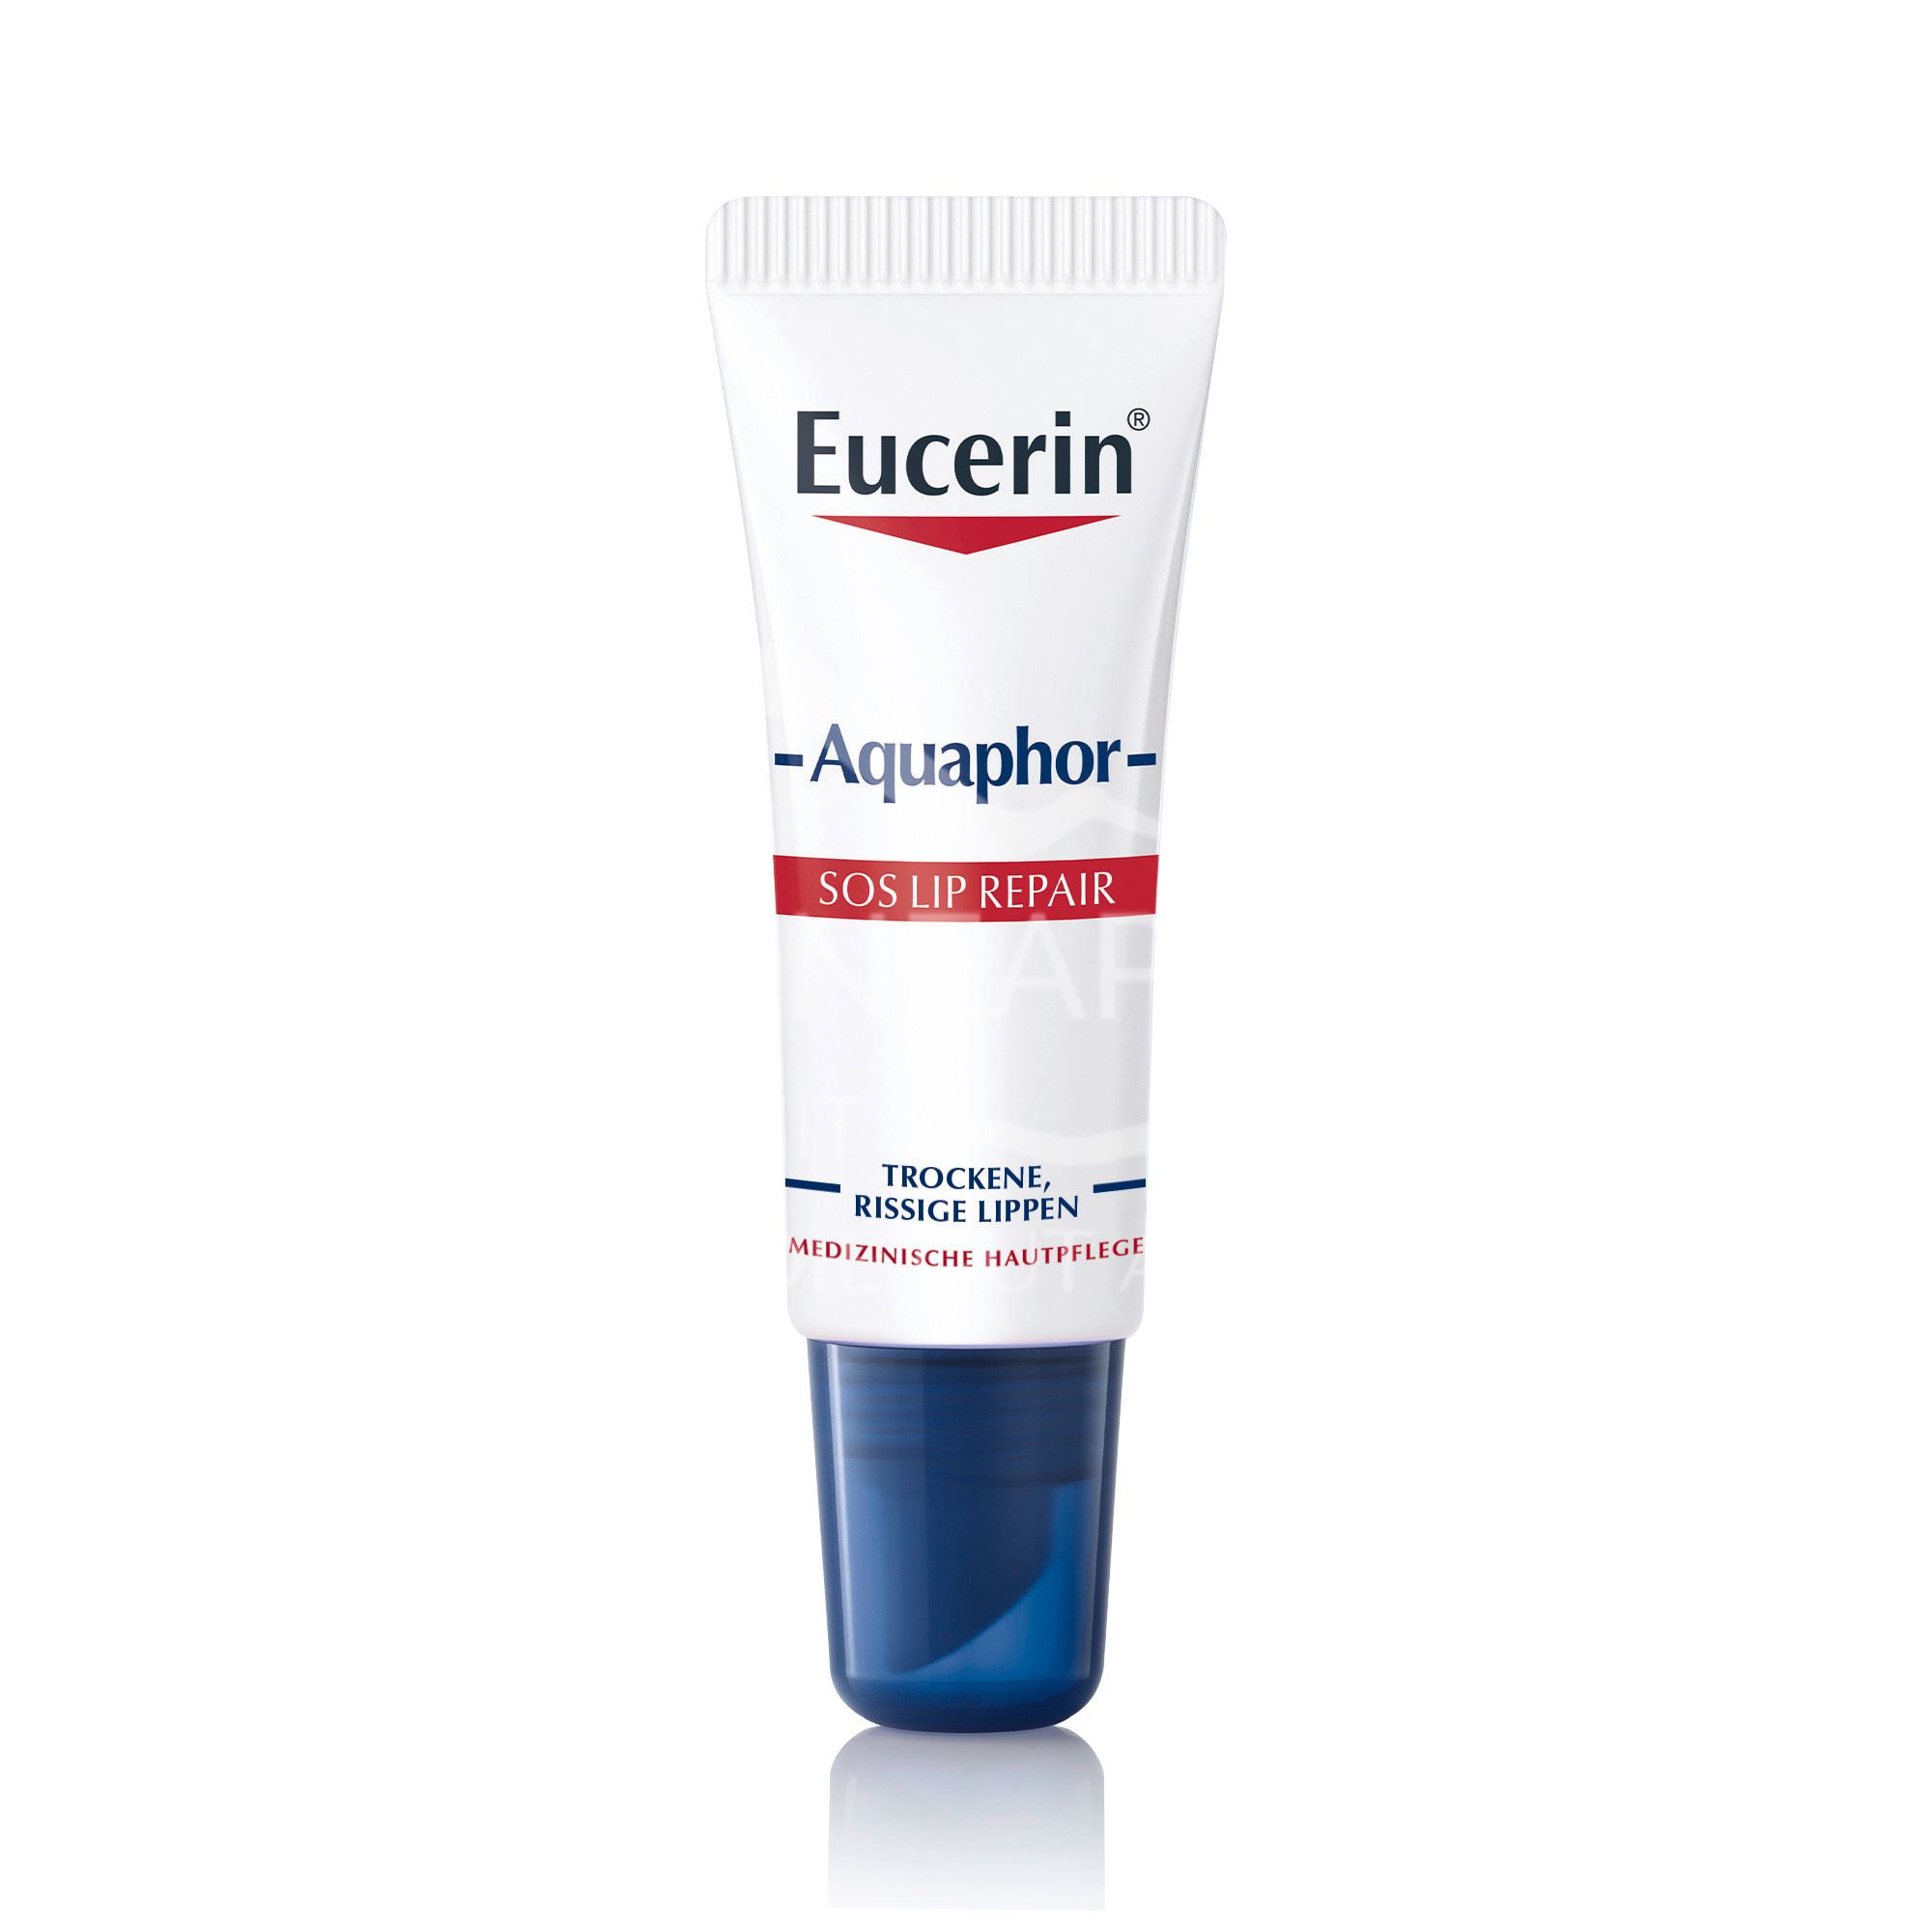 Eucerin® AQUAPHOR SOS Lip Repair 